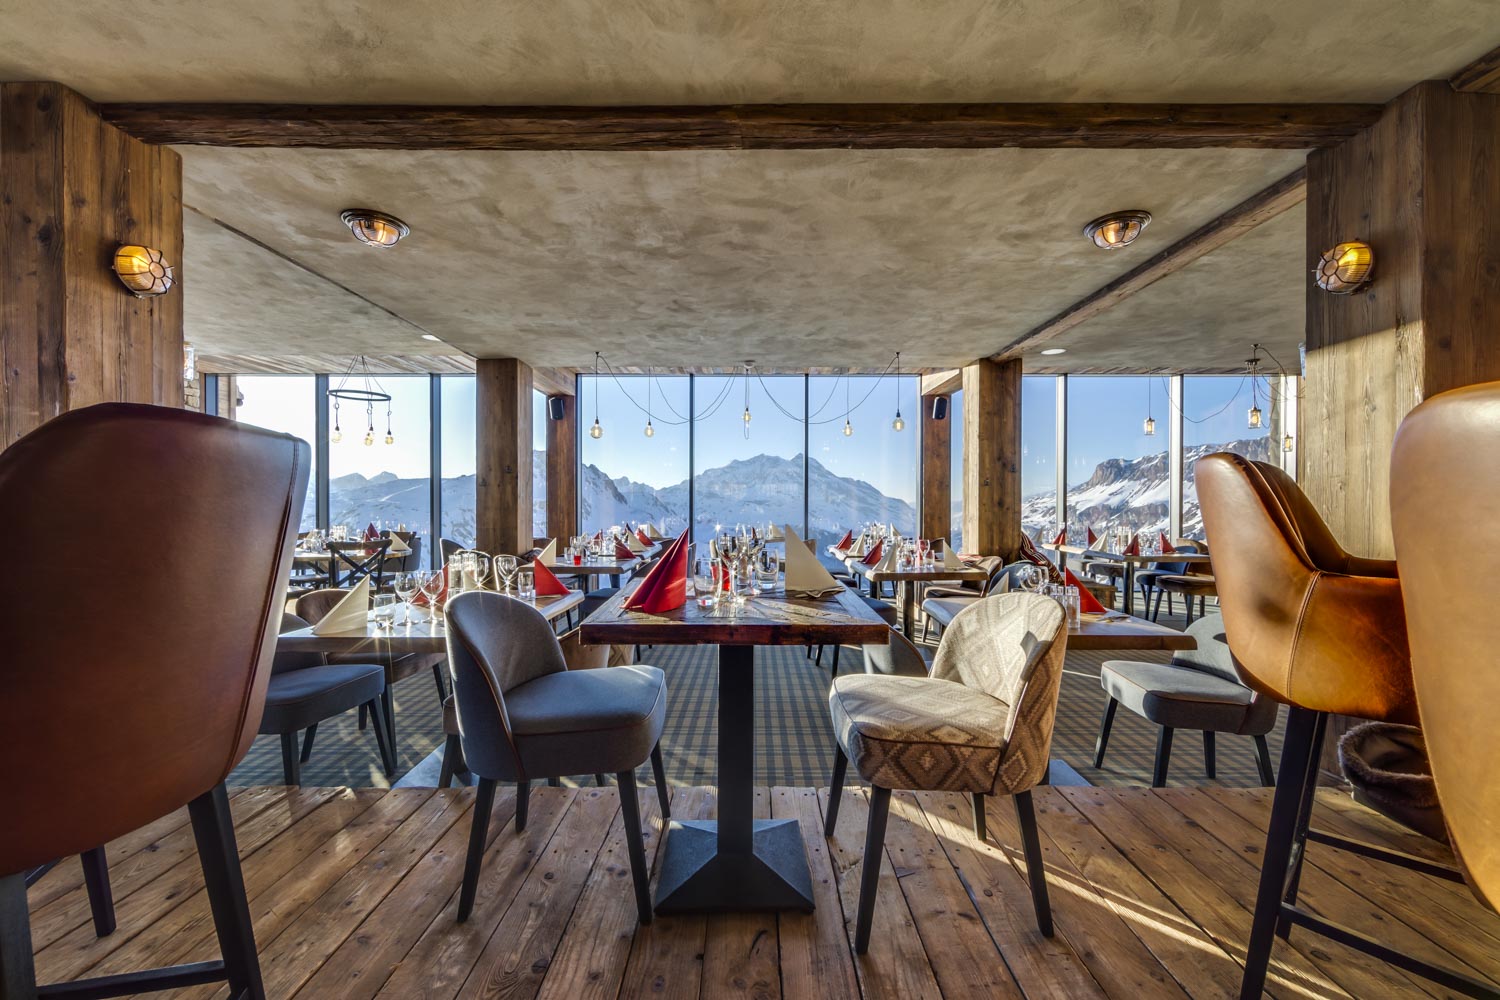 Le Refuge de Solaise - Luxury Hotel Restaurant - Restaurant with View - Val d'IsÃ¨re - Mountain View